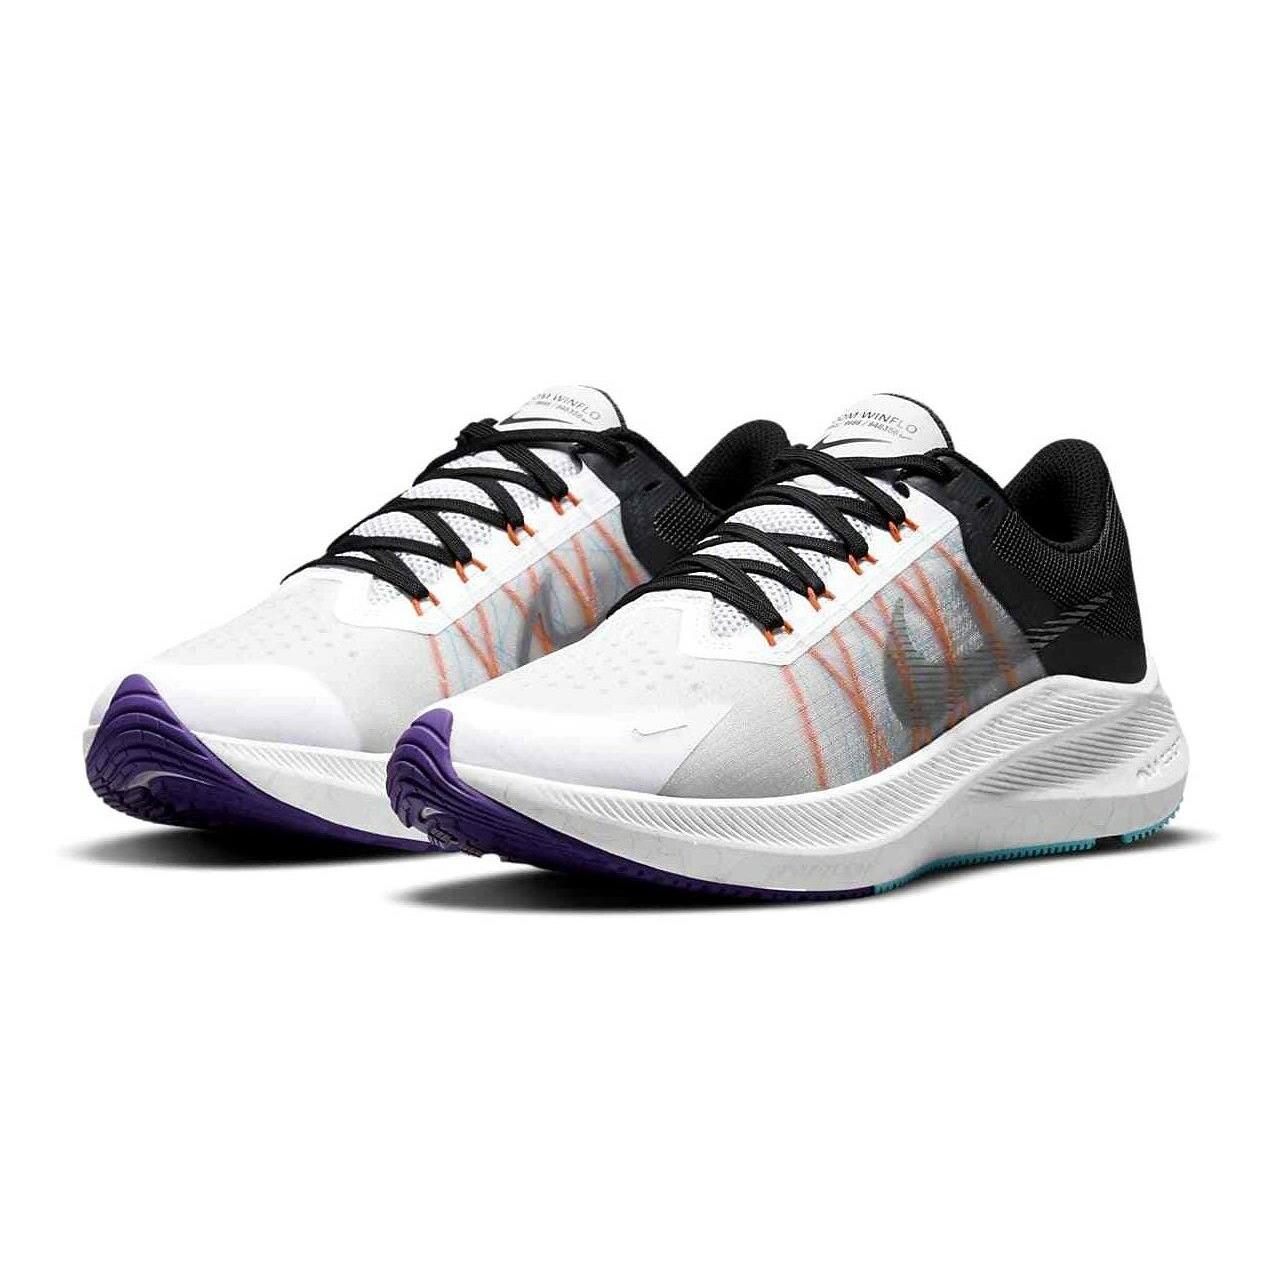 Nike Zoom Winflo 6 Mens Size 8.5 Sneakers Shoes CW3421 103 White wm sz 10